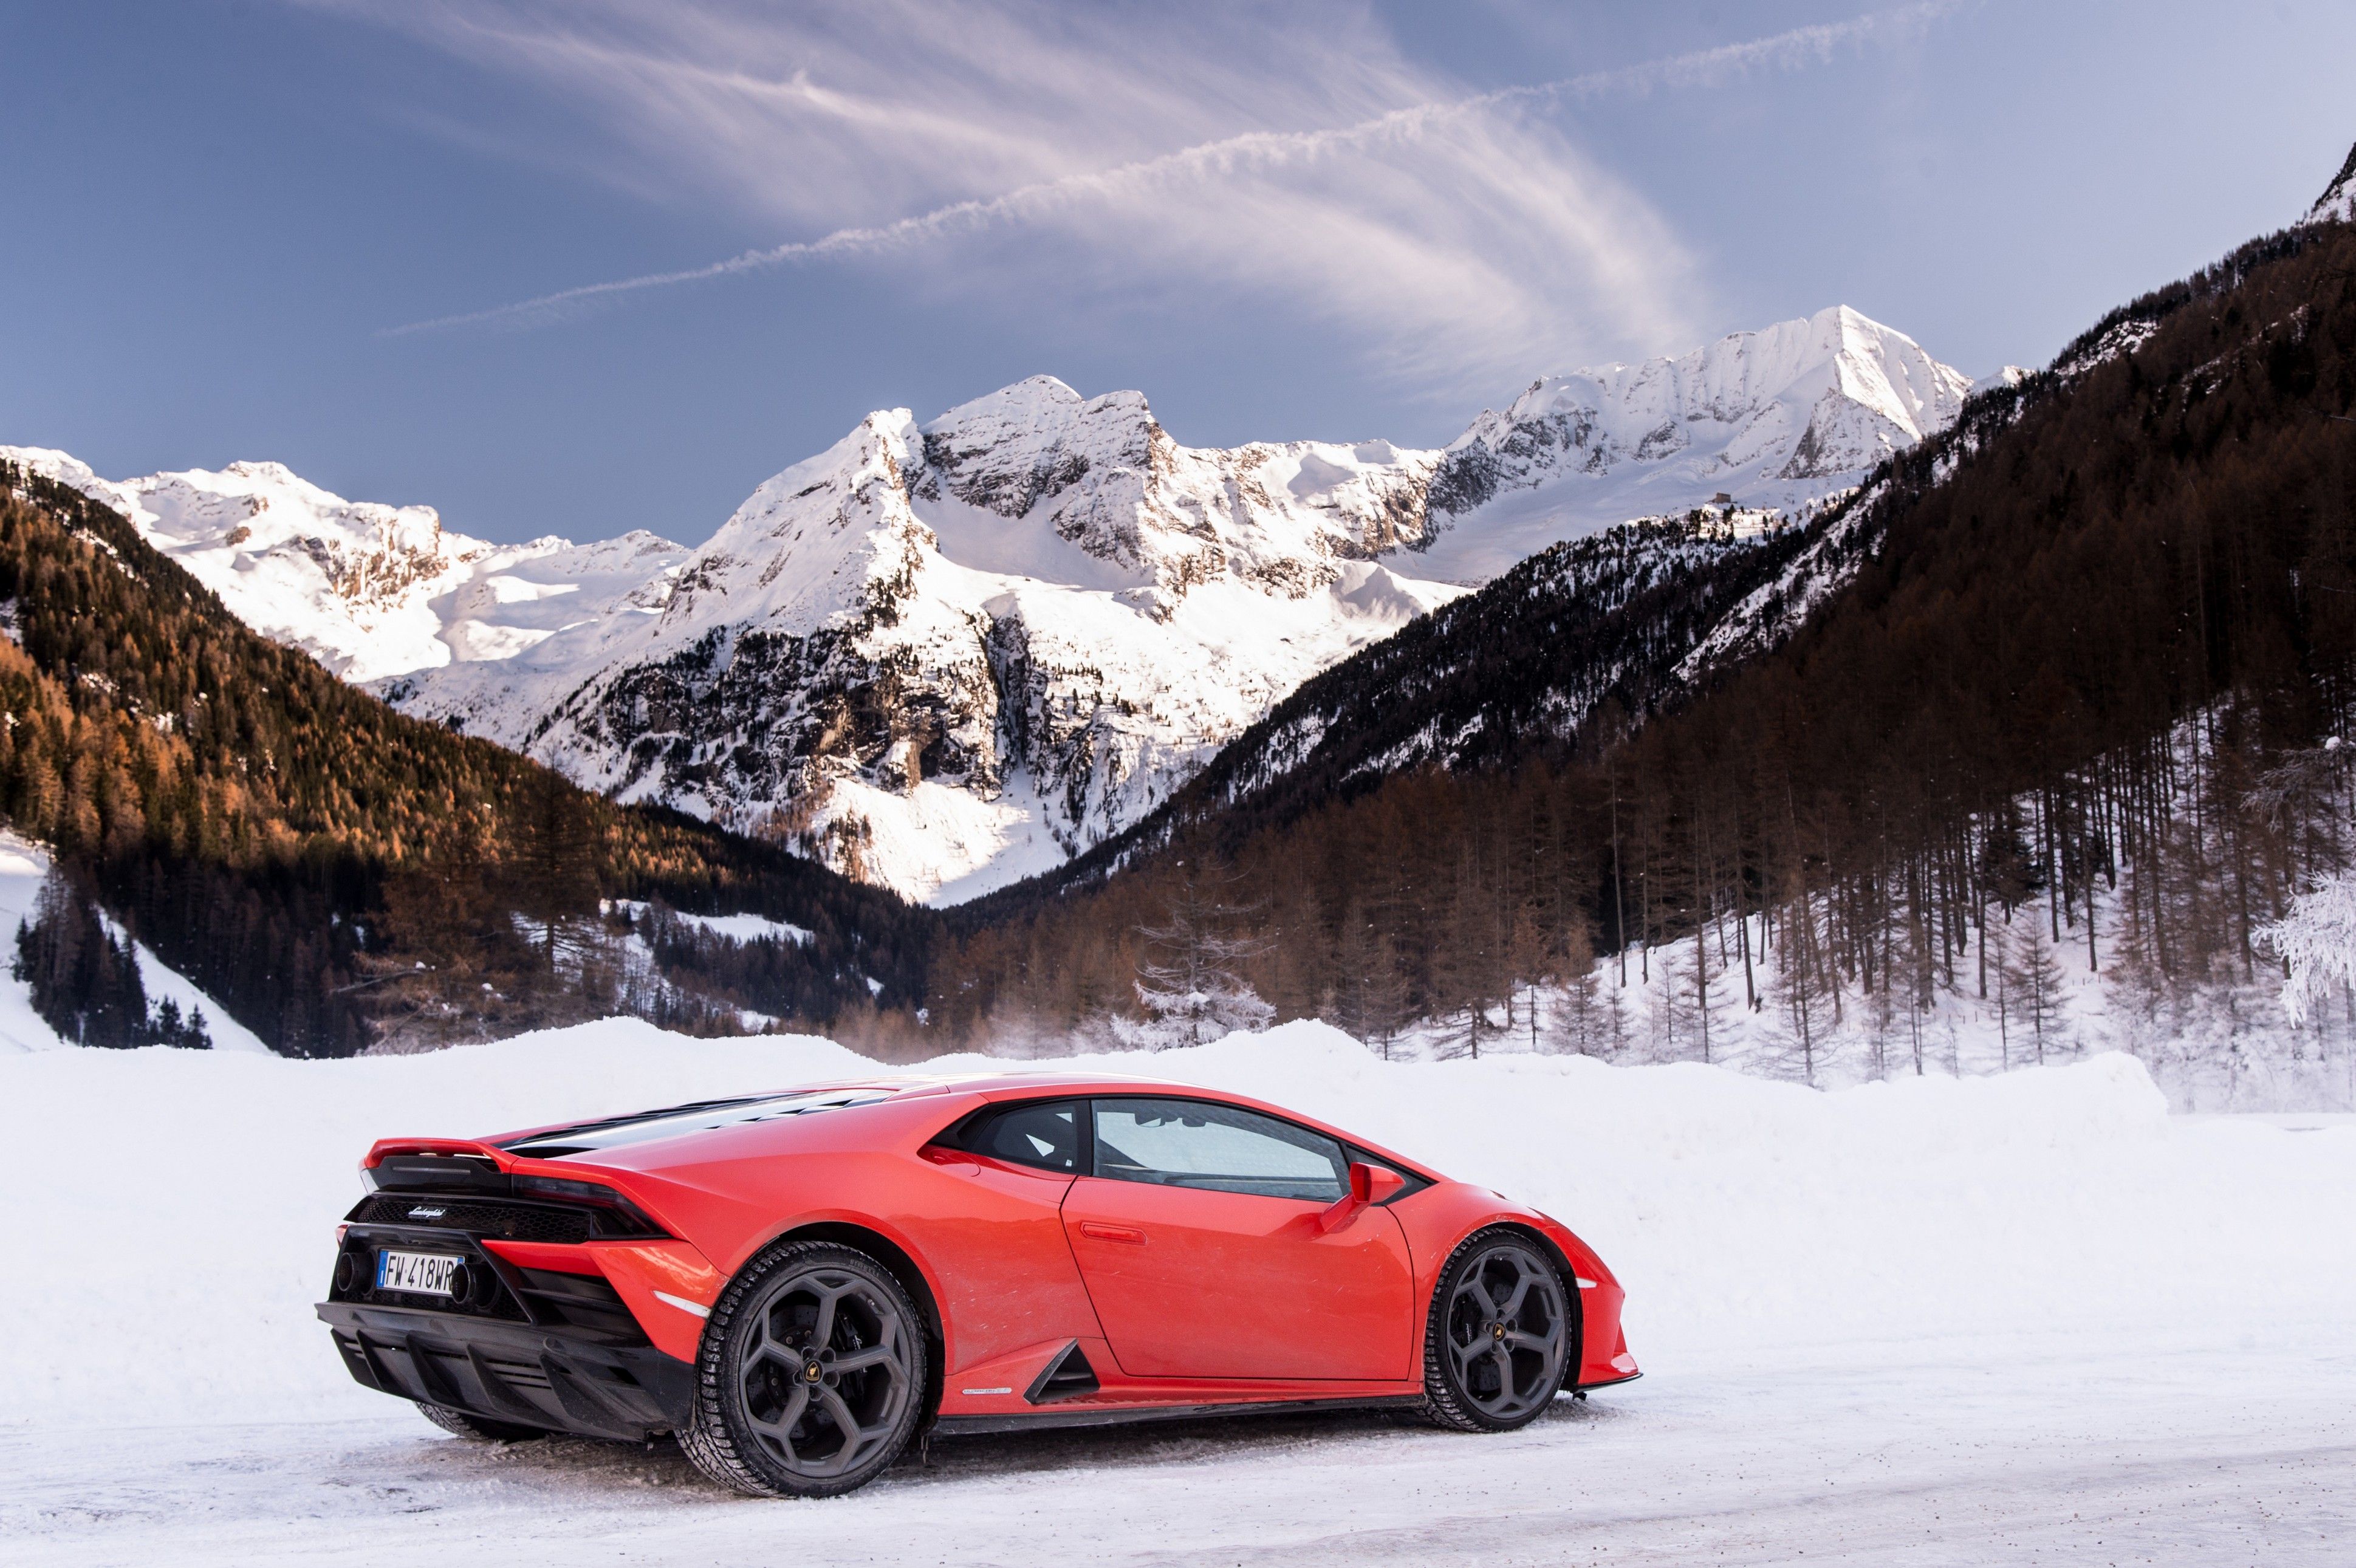 Amazing Wallpaper: The Lamborghini Urus, Aventador SVJ, and Huracan EVO Celebrate Christmas the Right Way